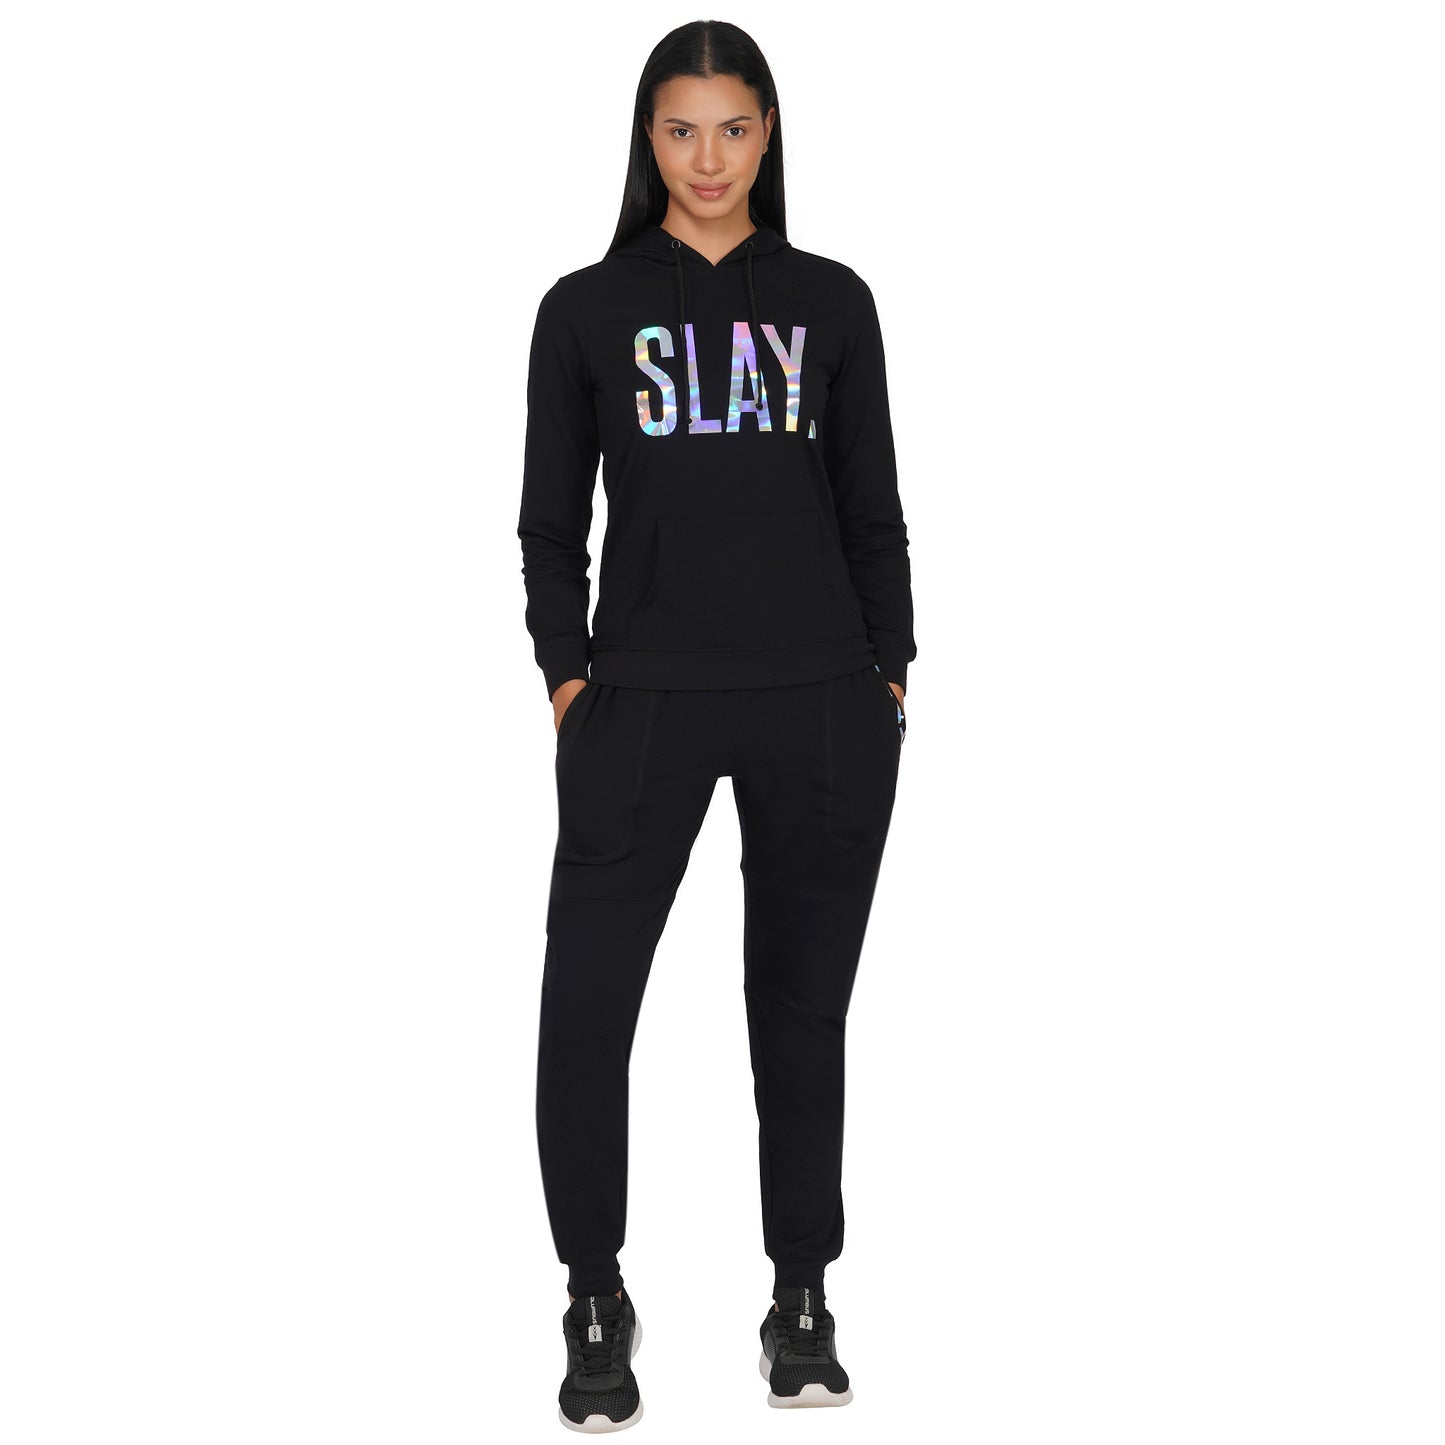 SLAY. Classic Women's Limited Edition Holographic Reflective Print Black Tracksuit-clothing-to-slay.myshopify.com-Tracksuit